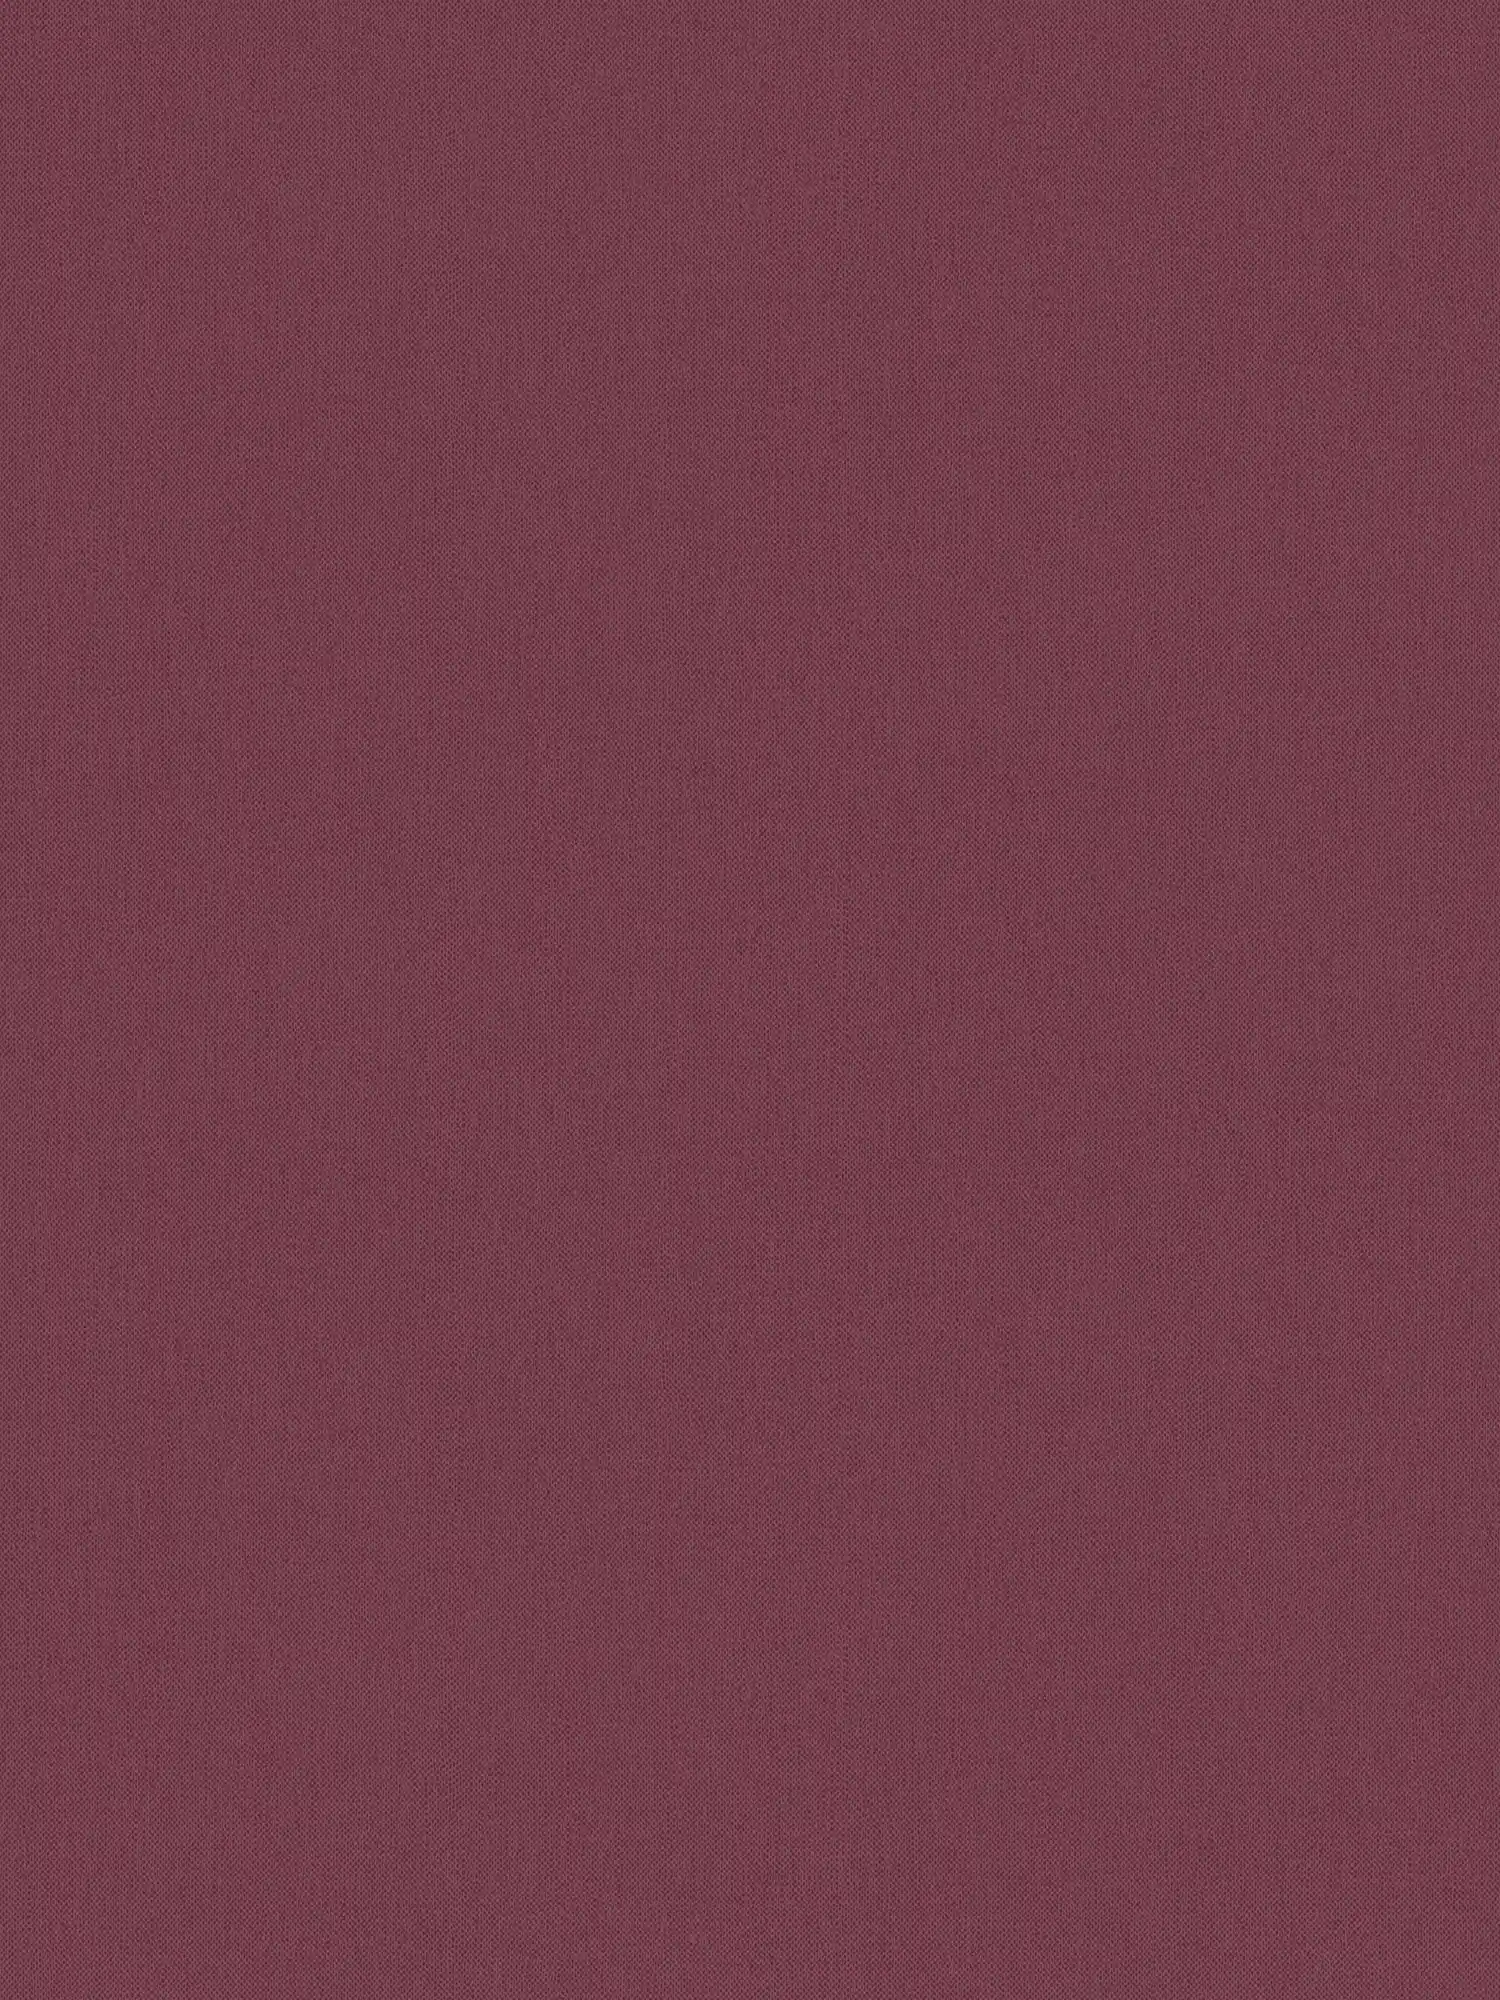 Bordeaux rote Tapete mit Textilstruktur Violett & Rot
